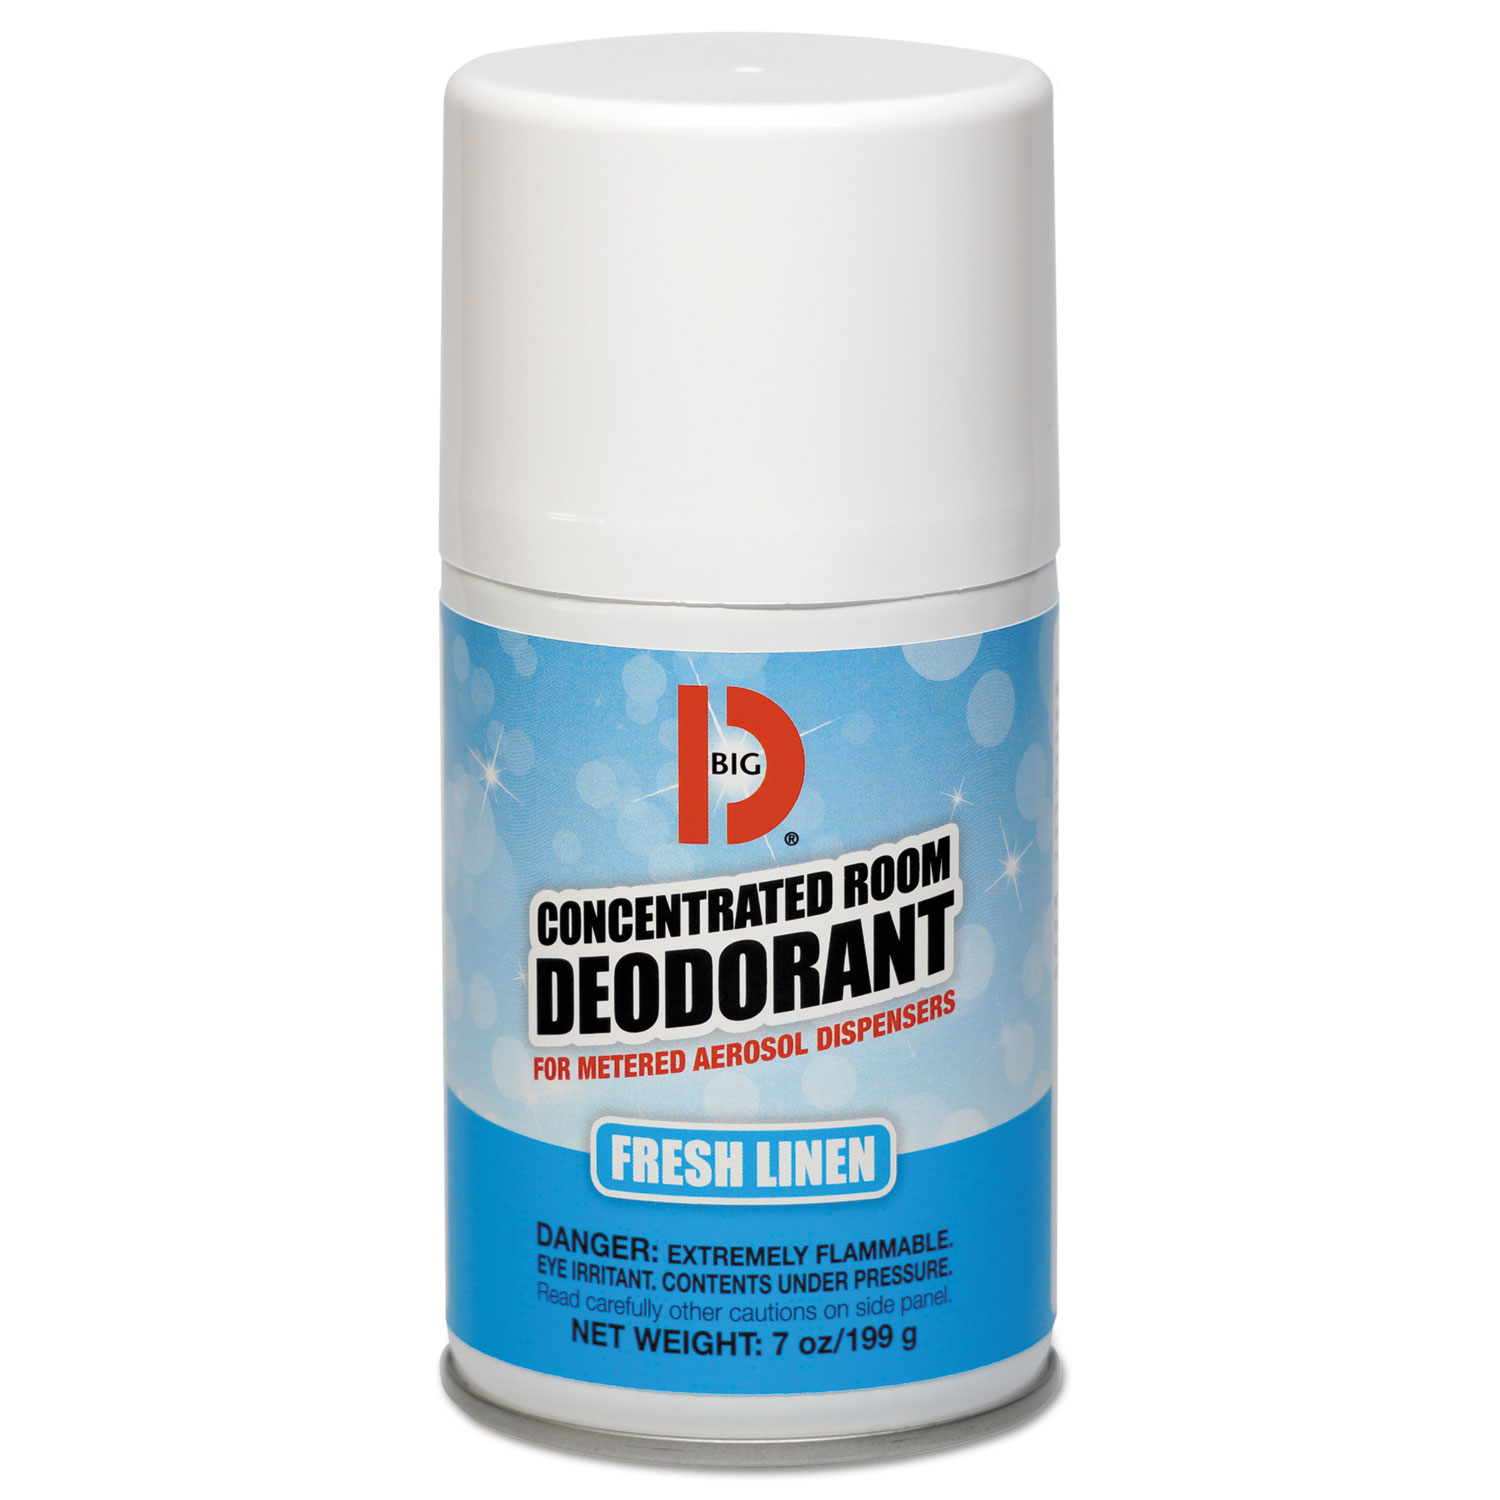 Metered Concentrated Room Deodorant, Fresh Linen Scent, 7 oz Aerosol, 12/Box